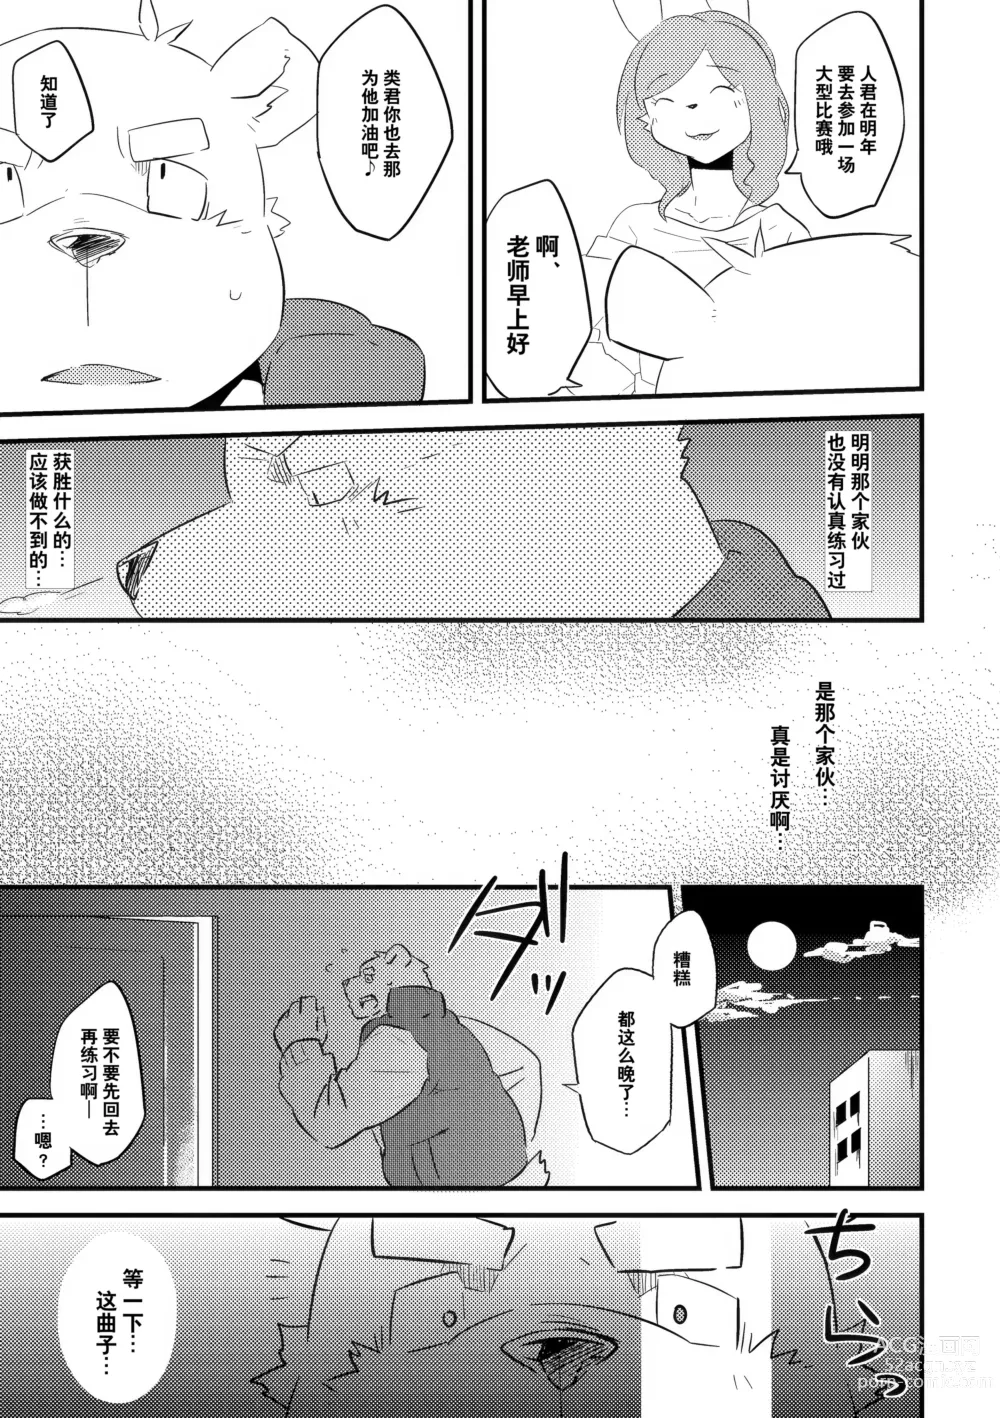 Page 6 of doujinshi 右手的恋人